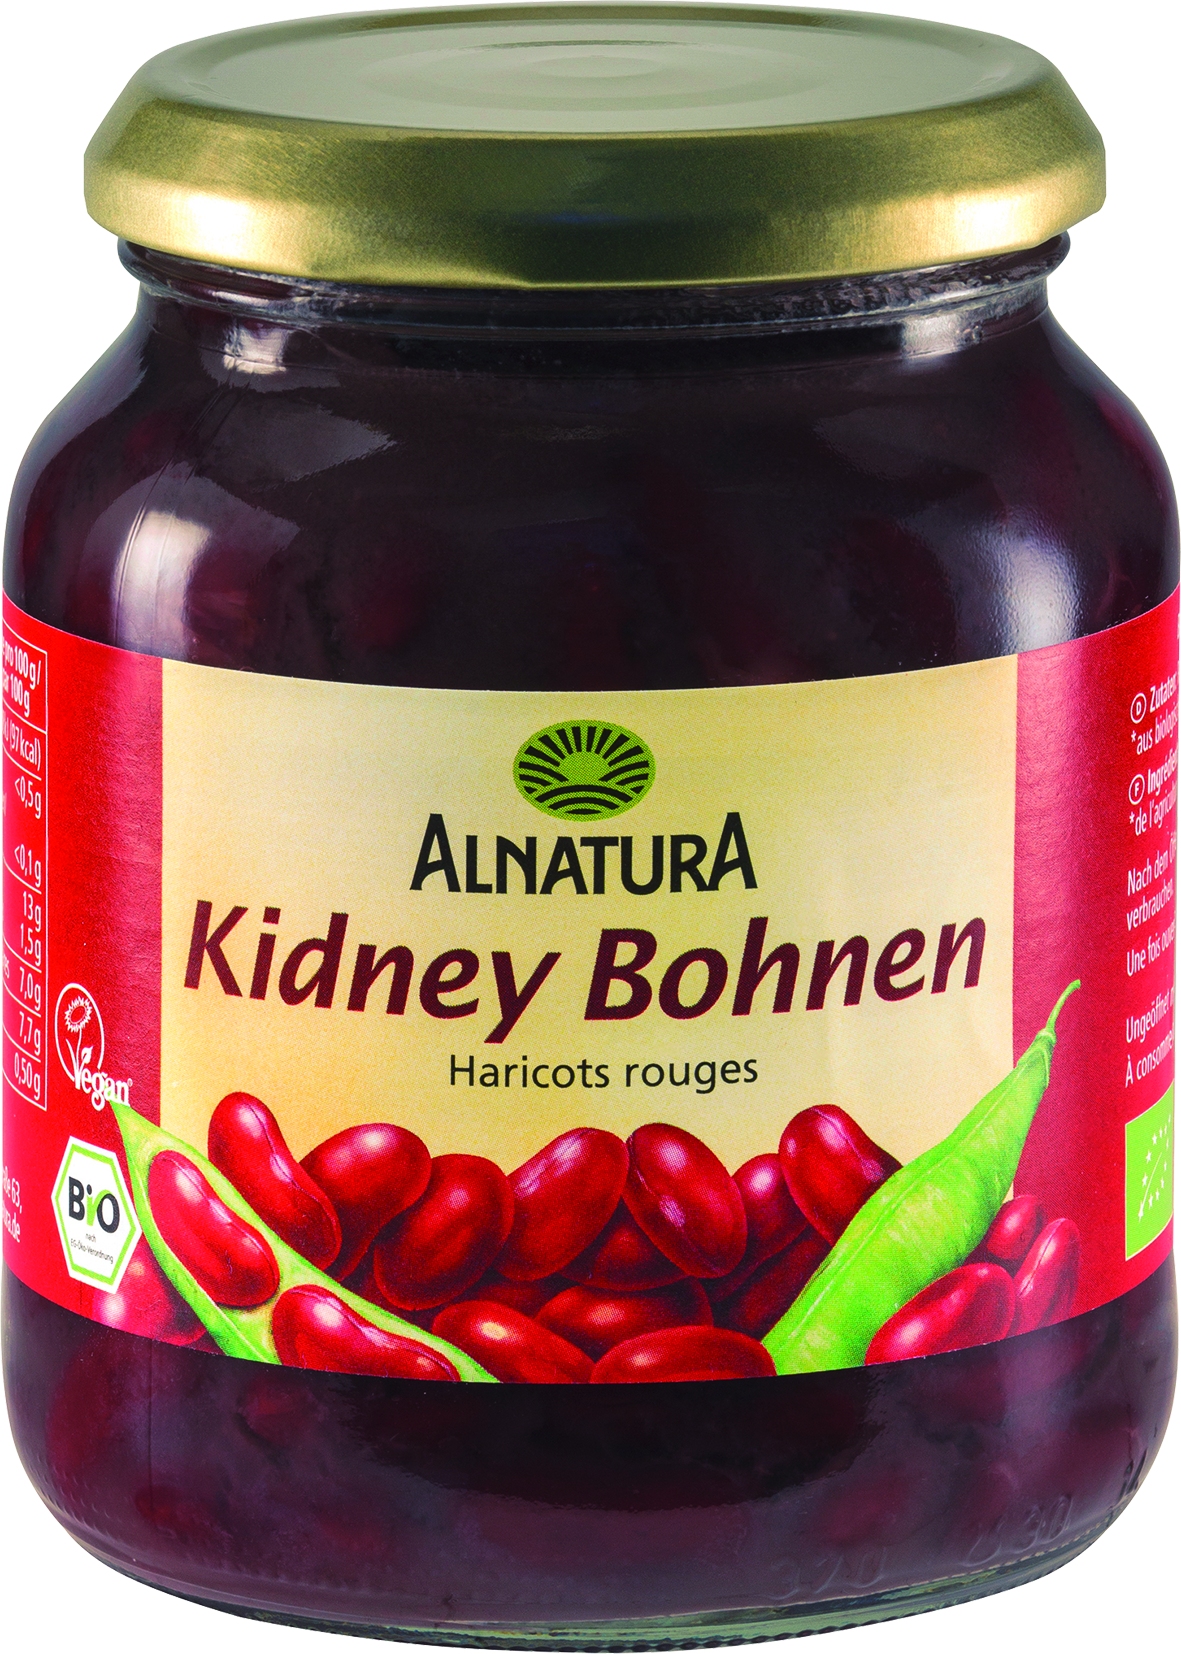 Kidney Bohnen   